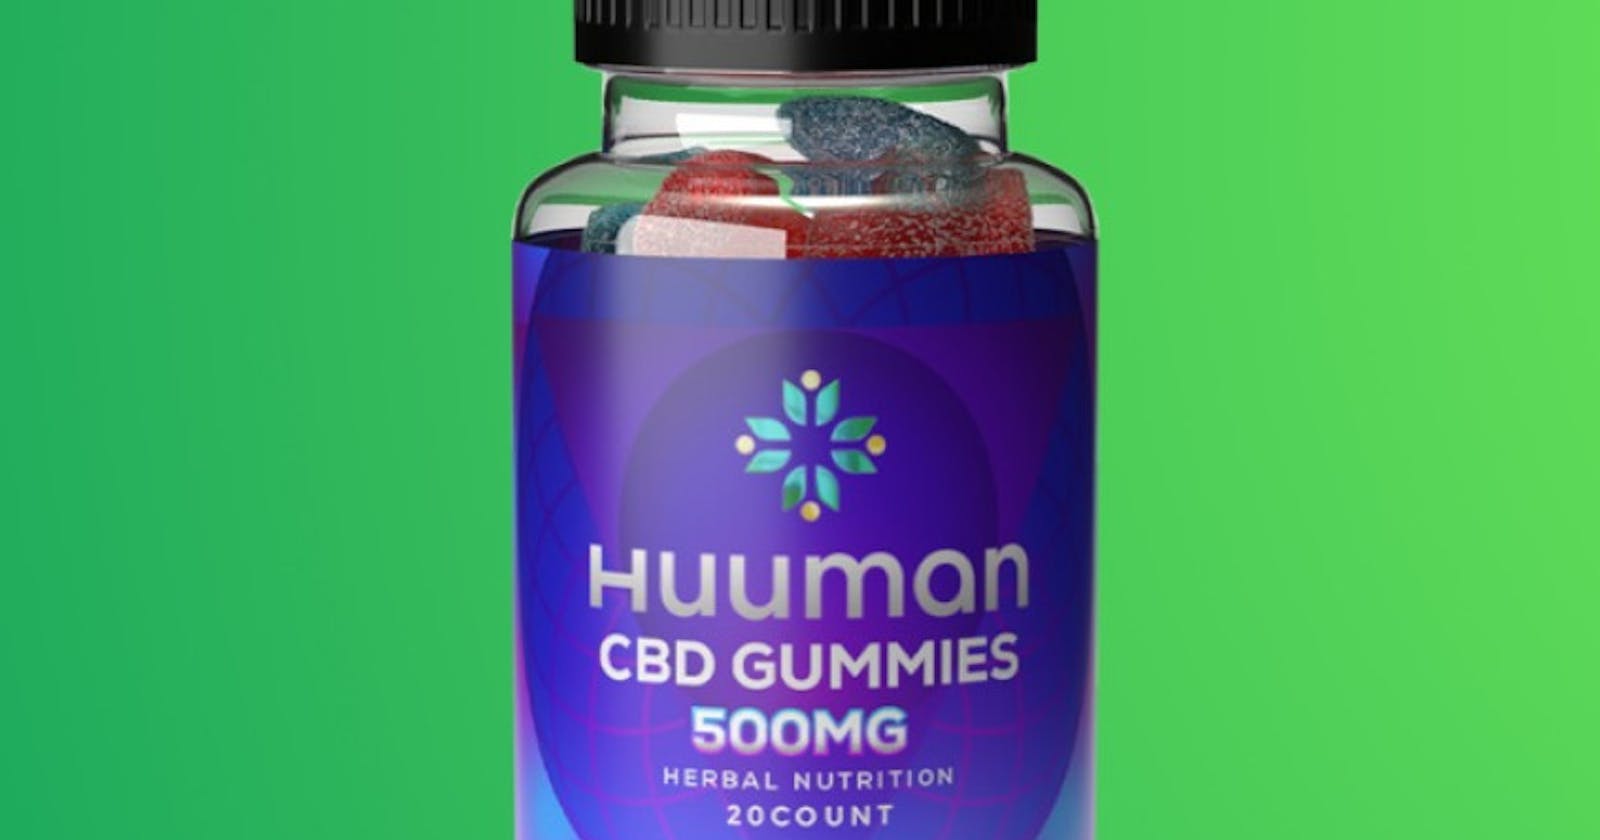 Treat Yourself to a Calming Moment with Huuman CBD Gummies